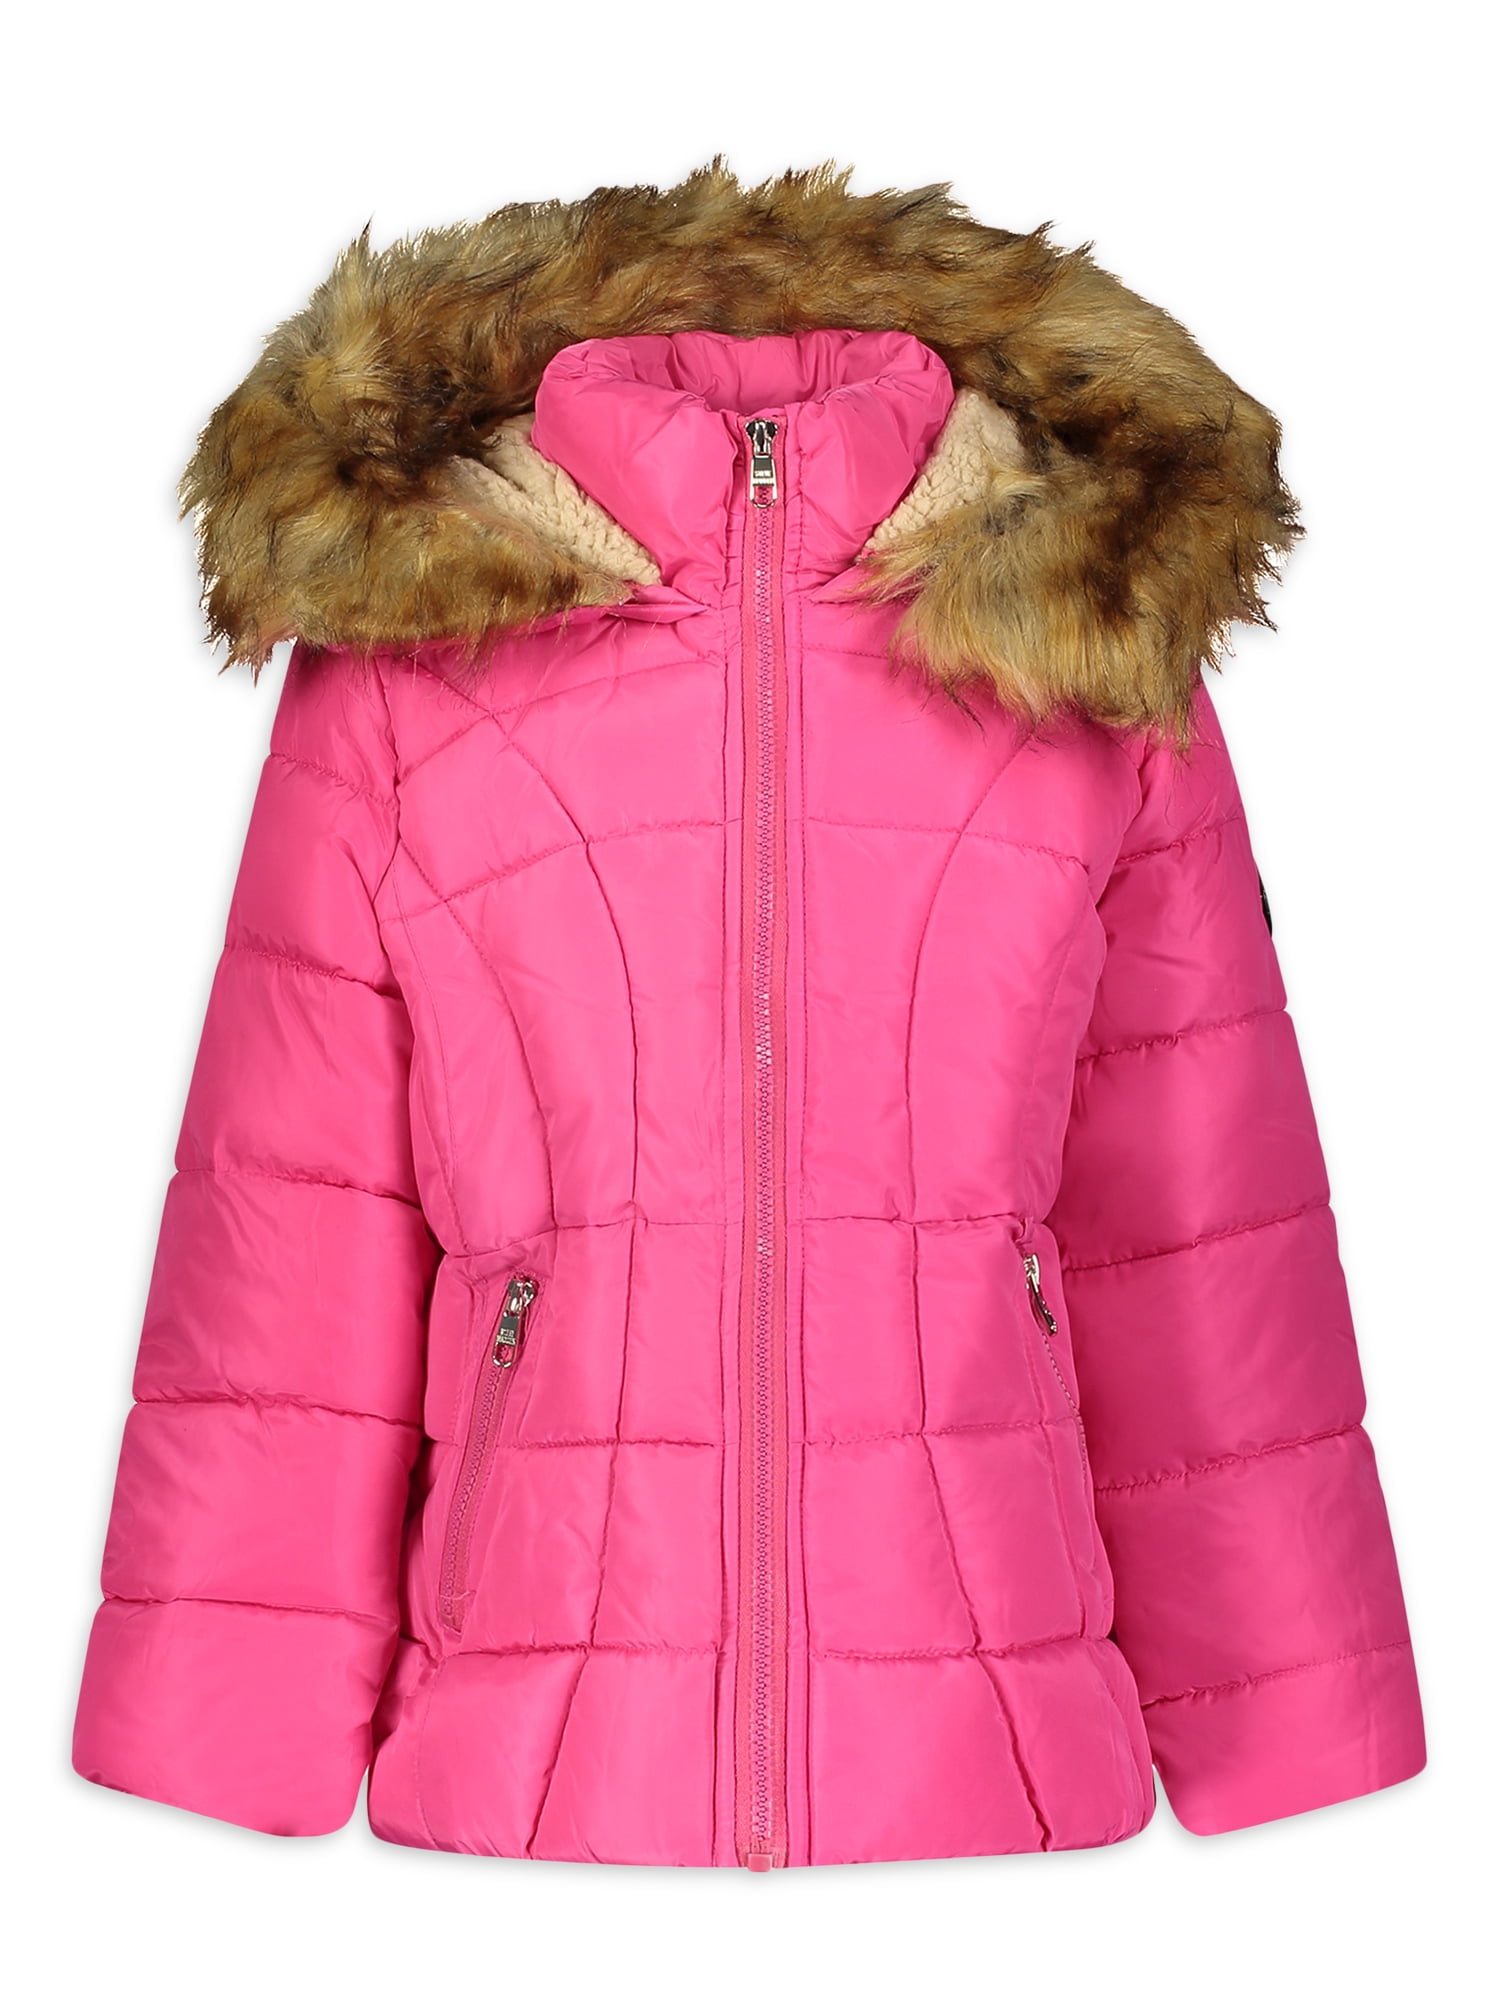 $90 Madden Girl Toddler 2T Soft Black Warm Winter Botton Down Jacket Coat 